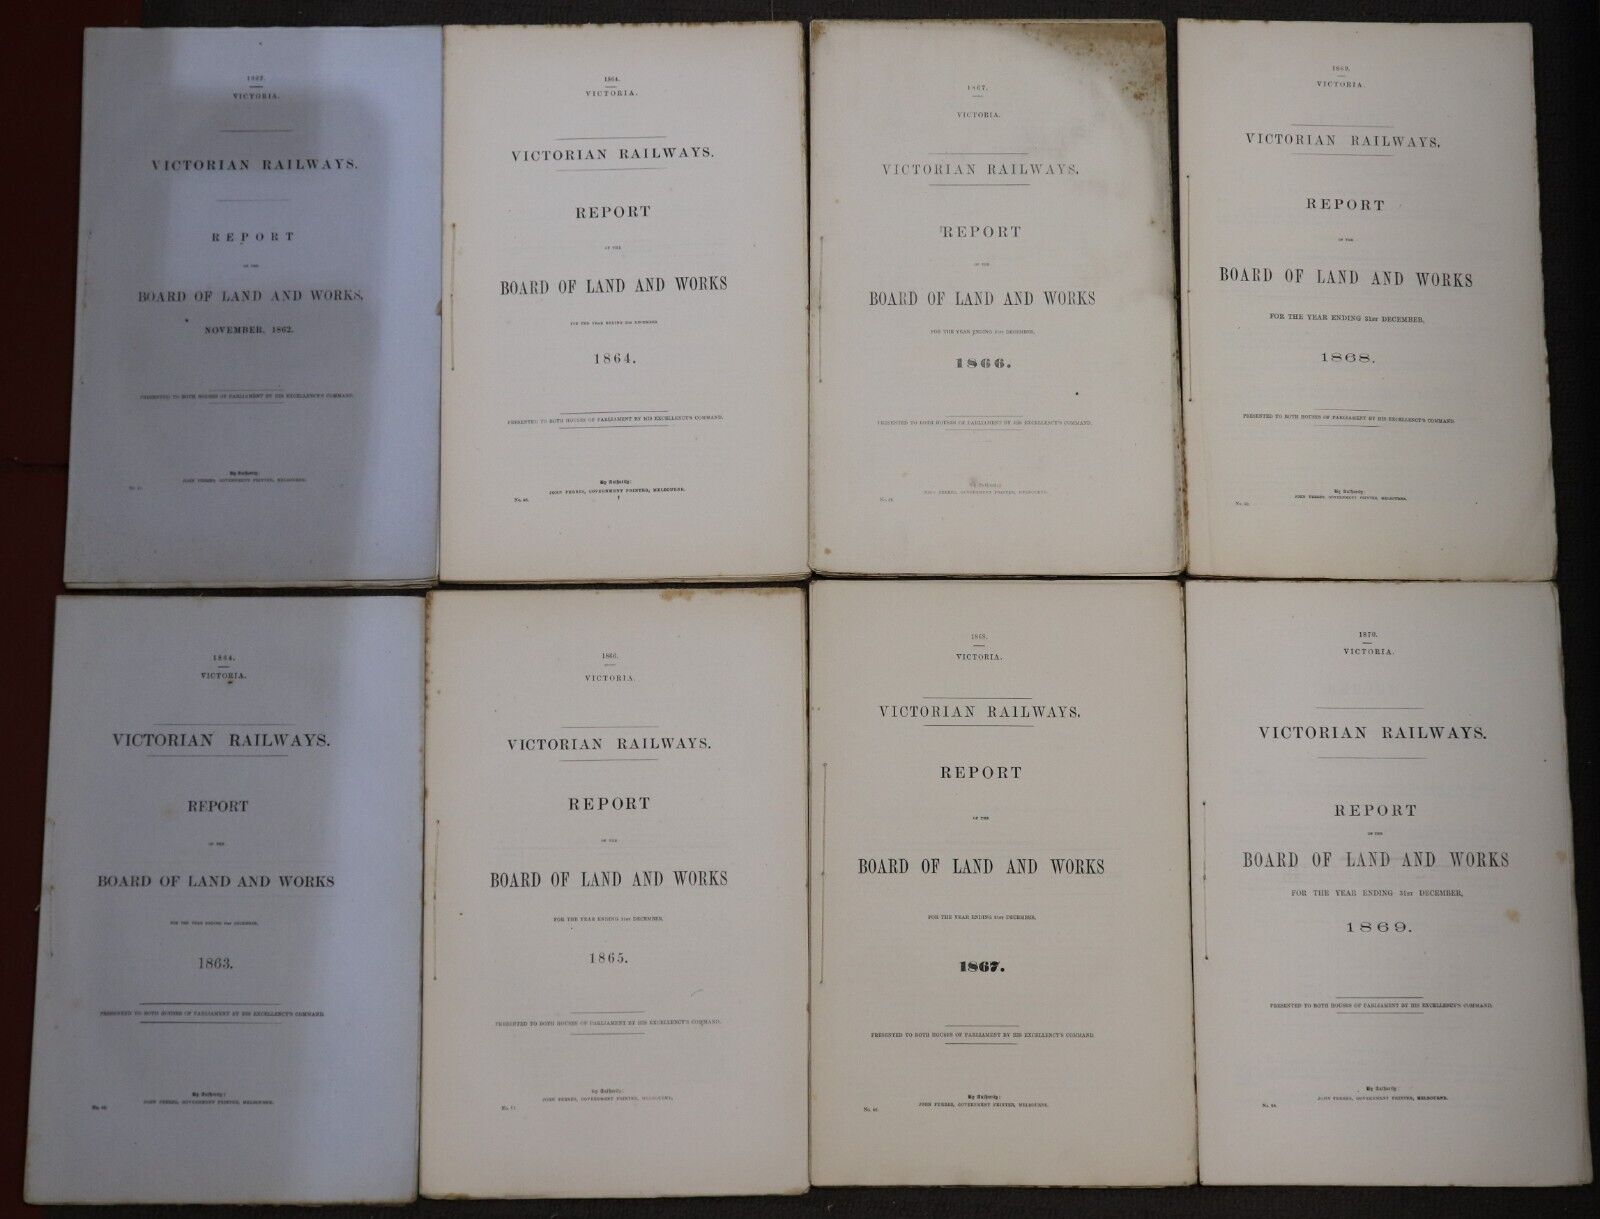 Parliamentary Papers: Victorian Railways - 1860's - Australia Train Books